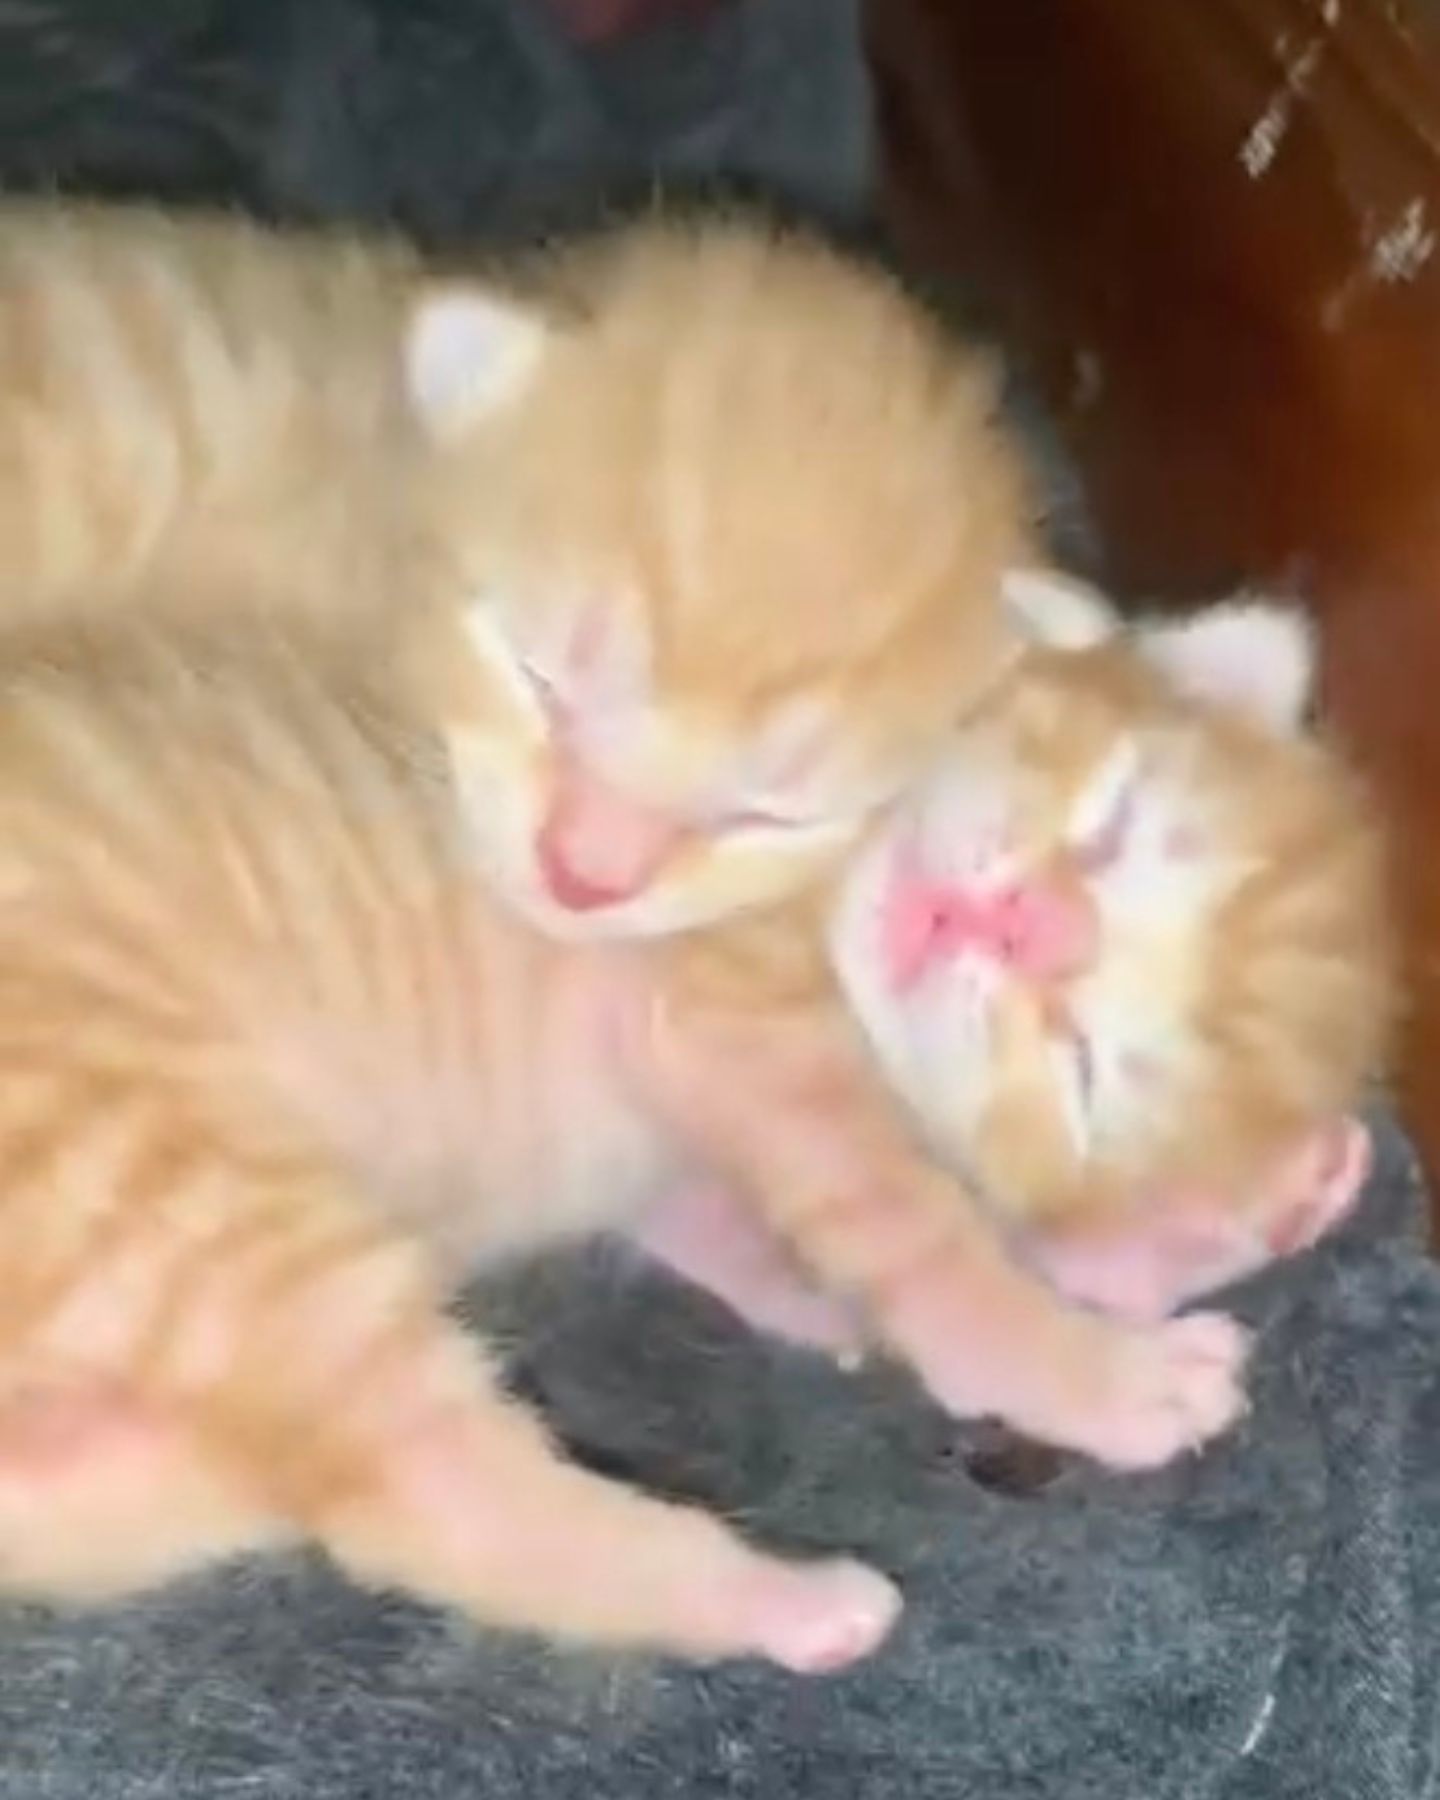 two kittens sleeping